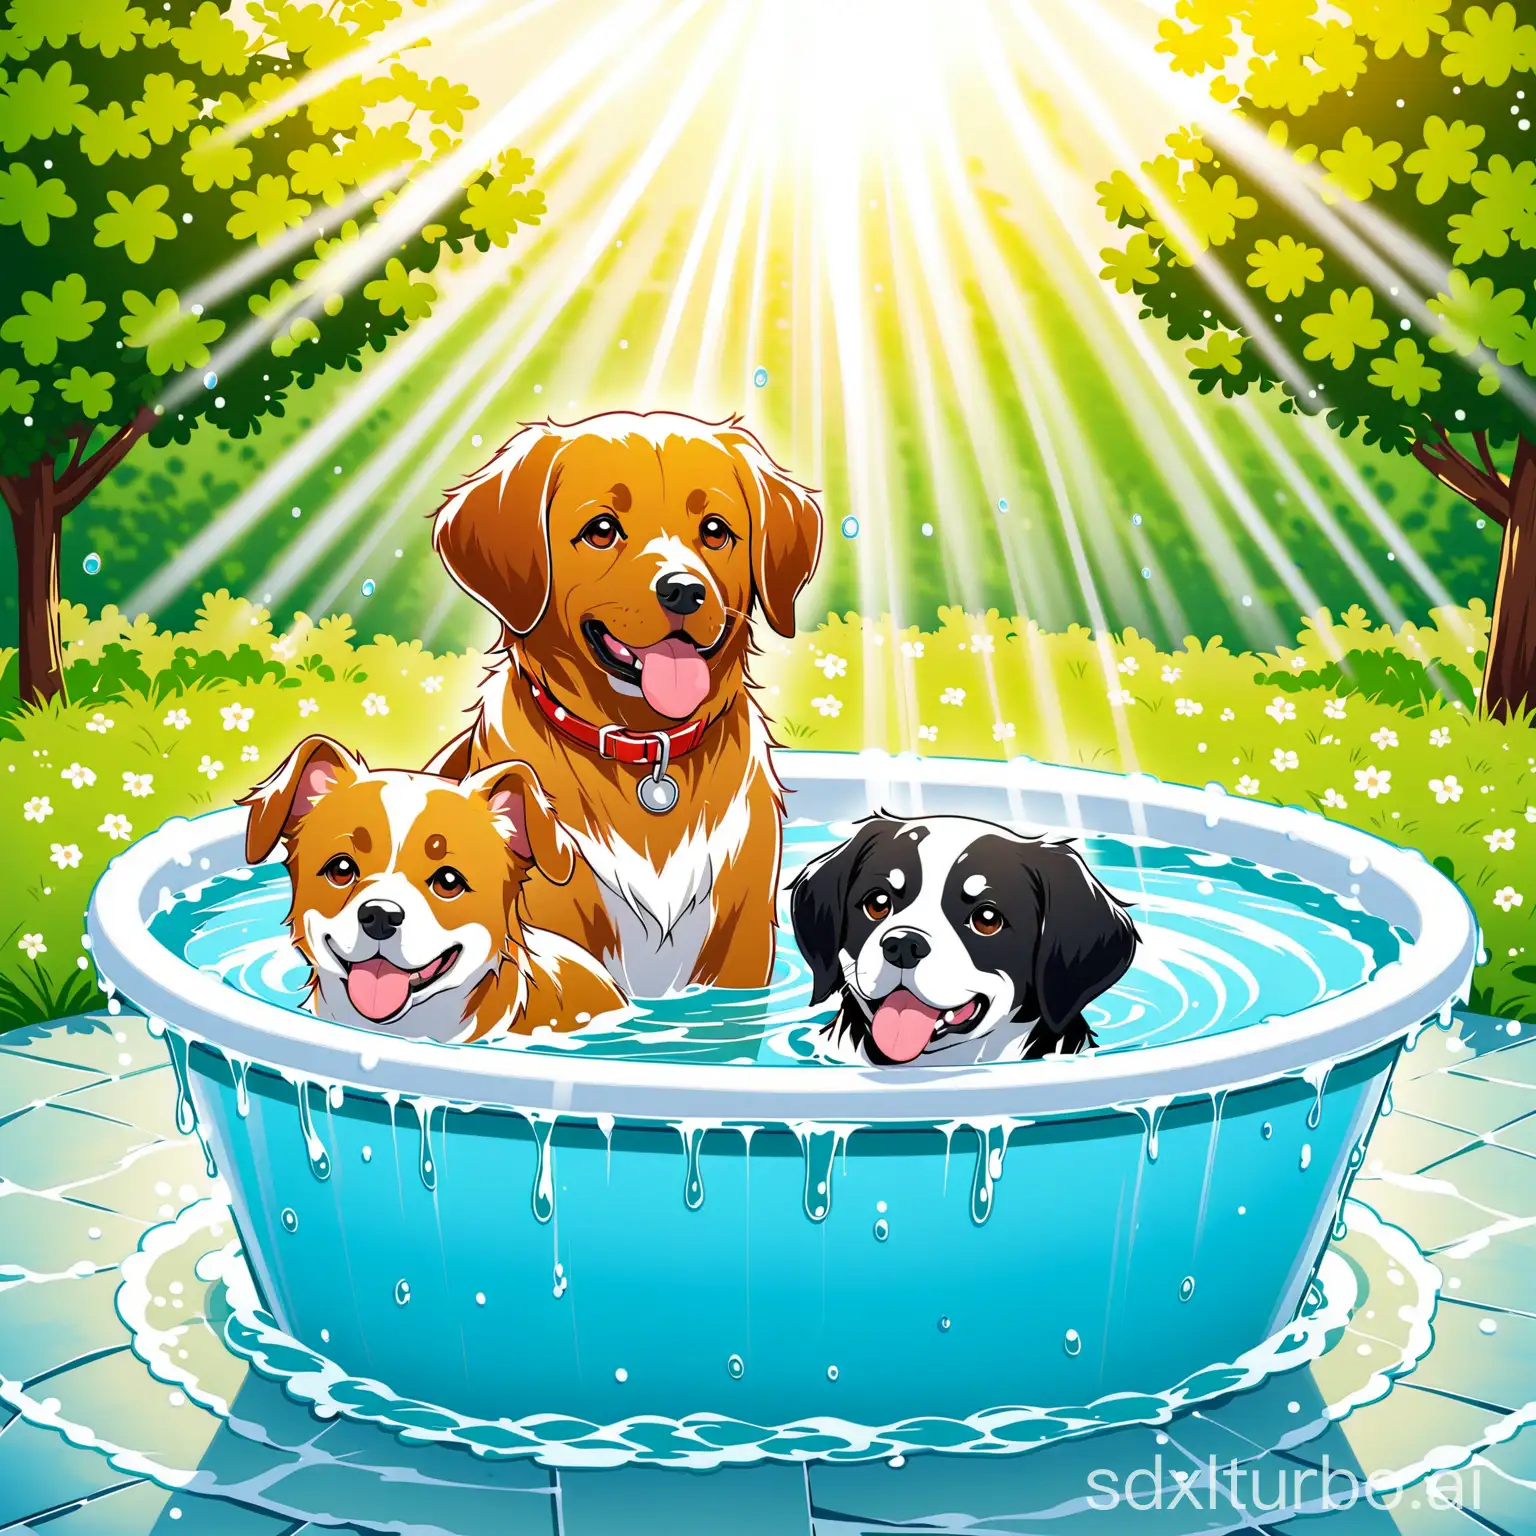 Dogs taking a bath